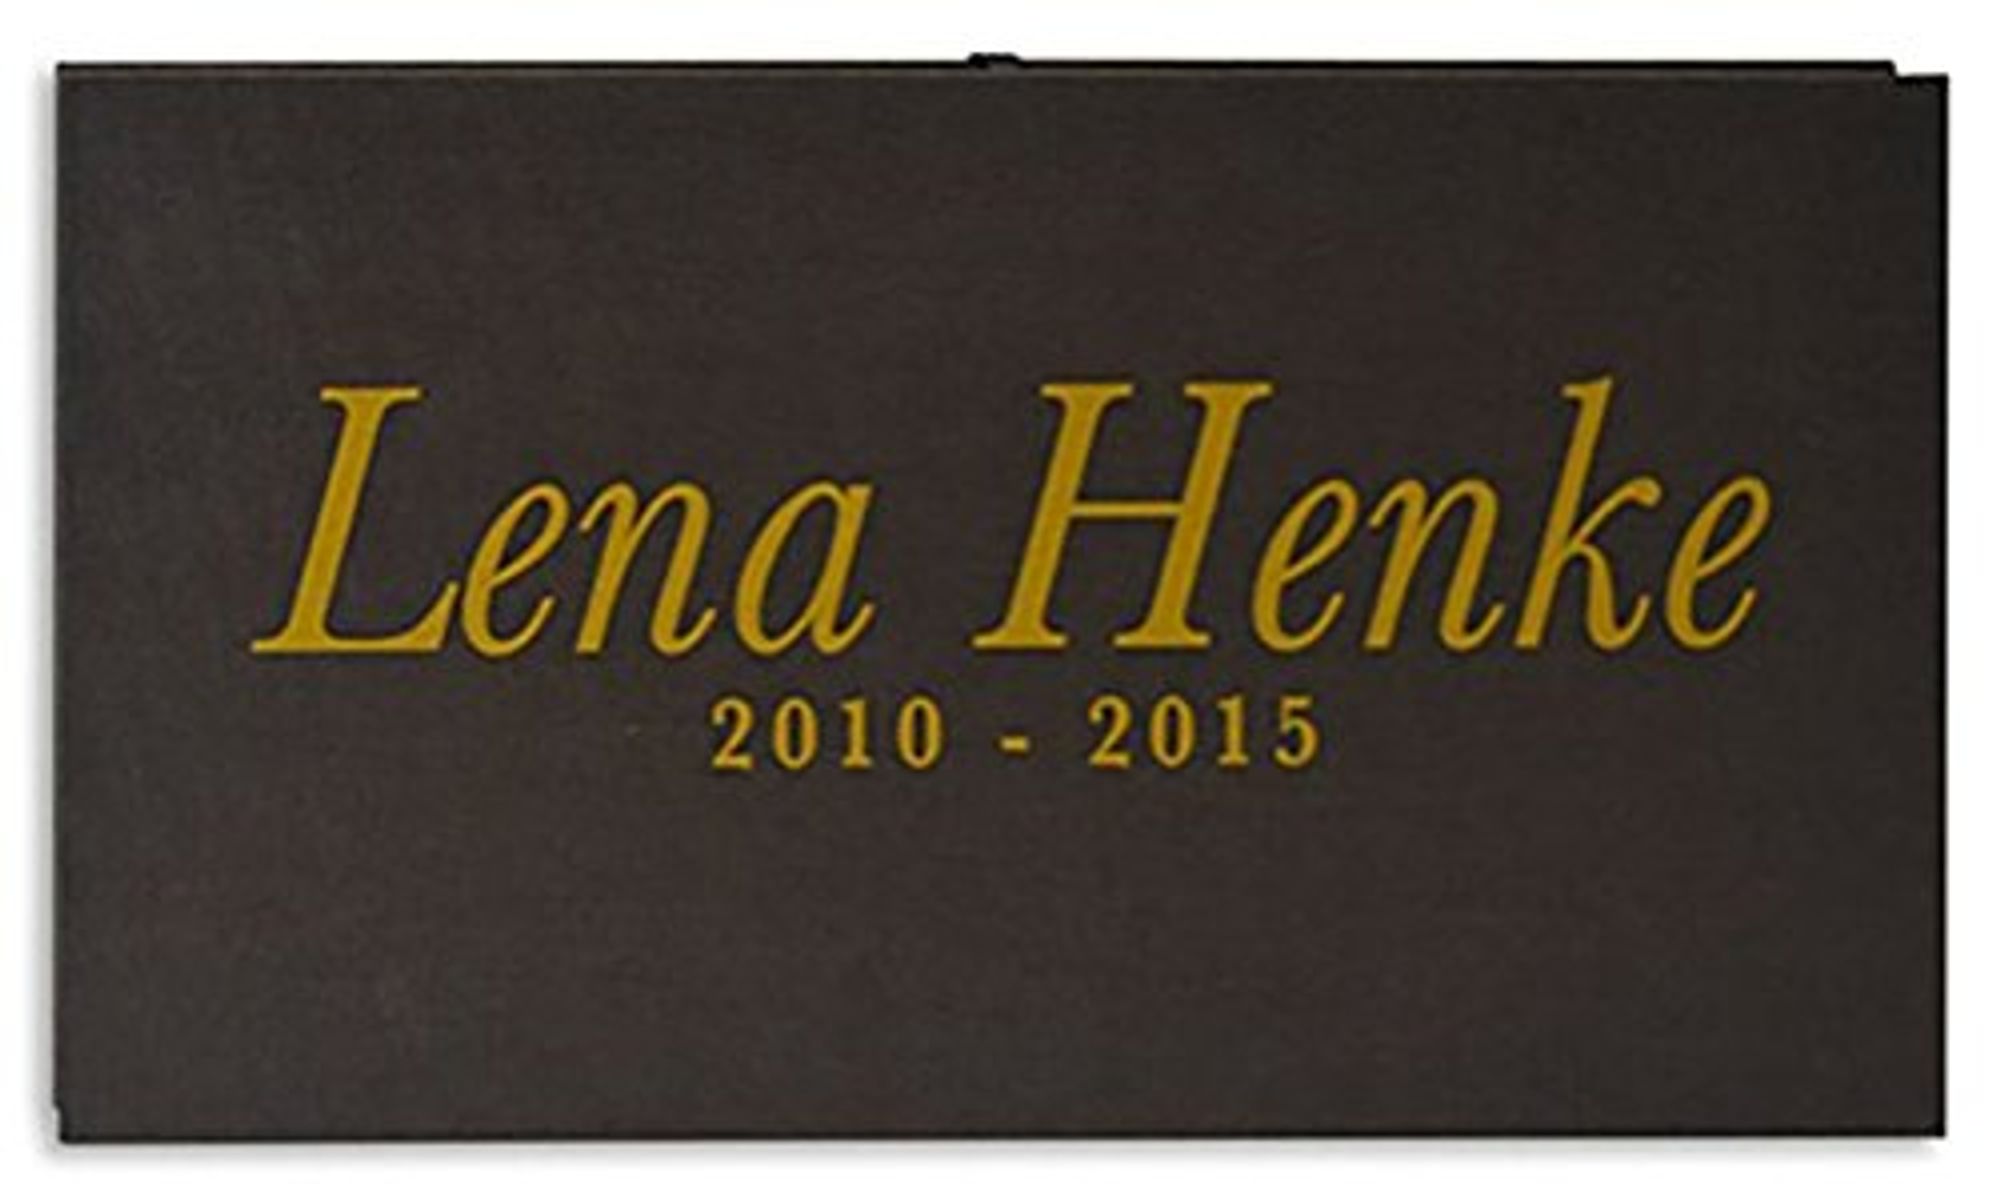 Detail view of Lena Henke 2010-2015 against a plain gray background